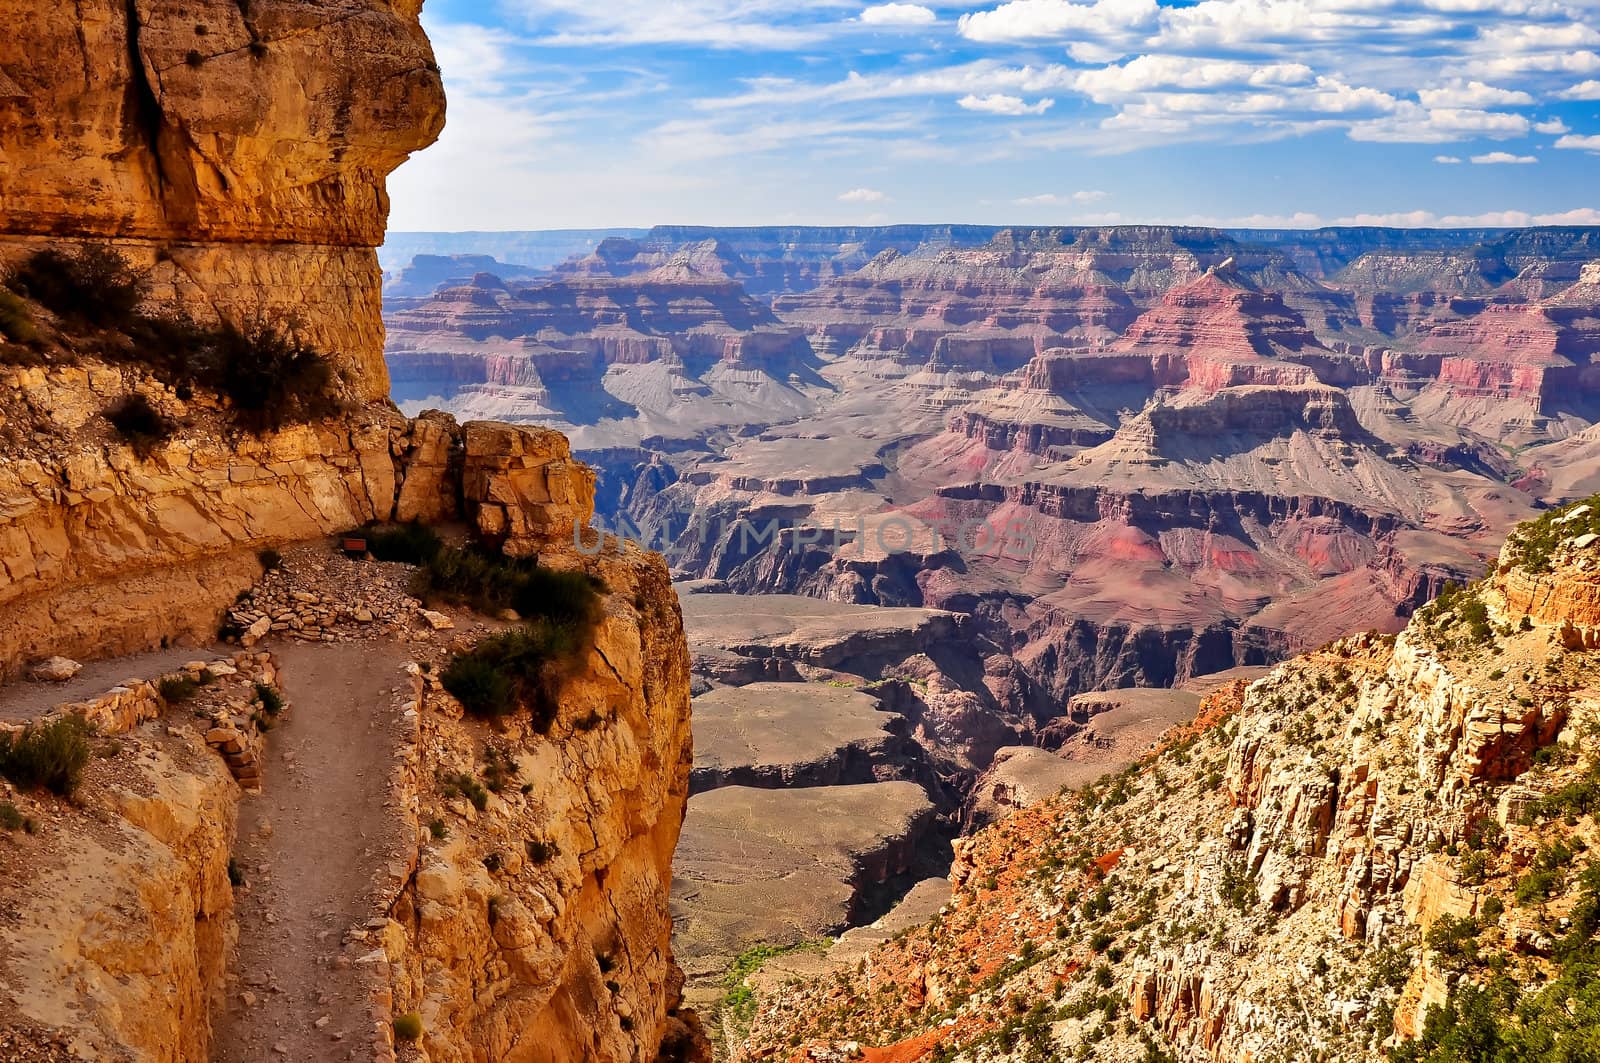 Grand canyon landscape view and hiking trail, Arizona, USA